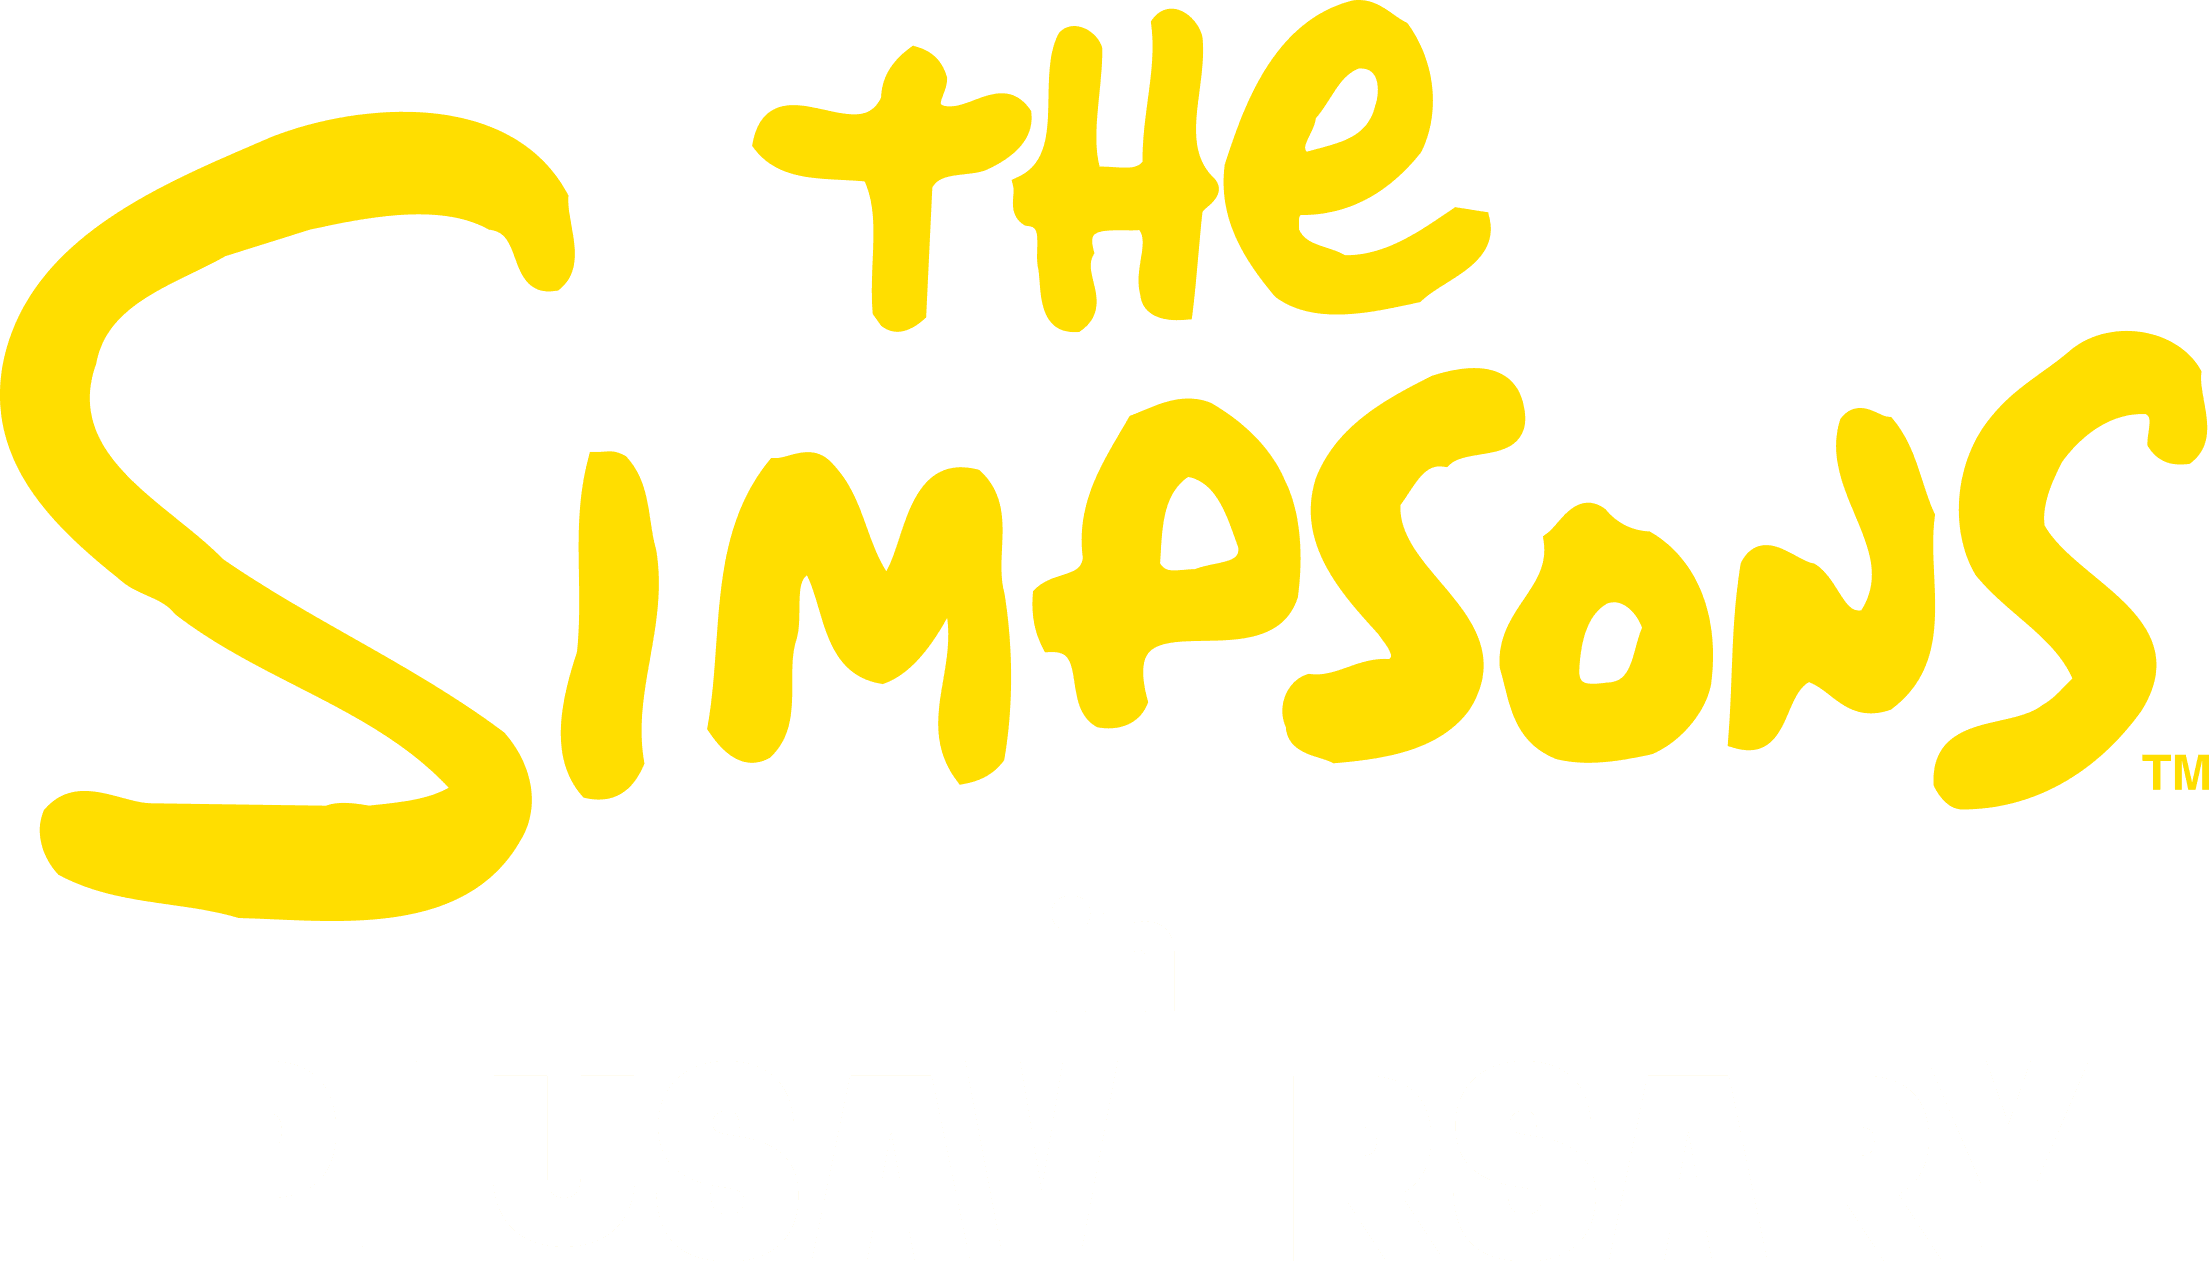 The Simpsons in Plusaversary logo